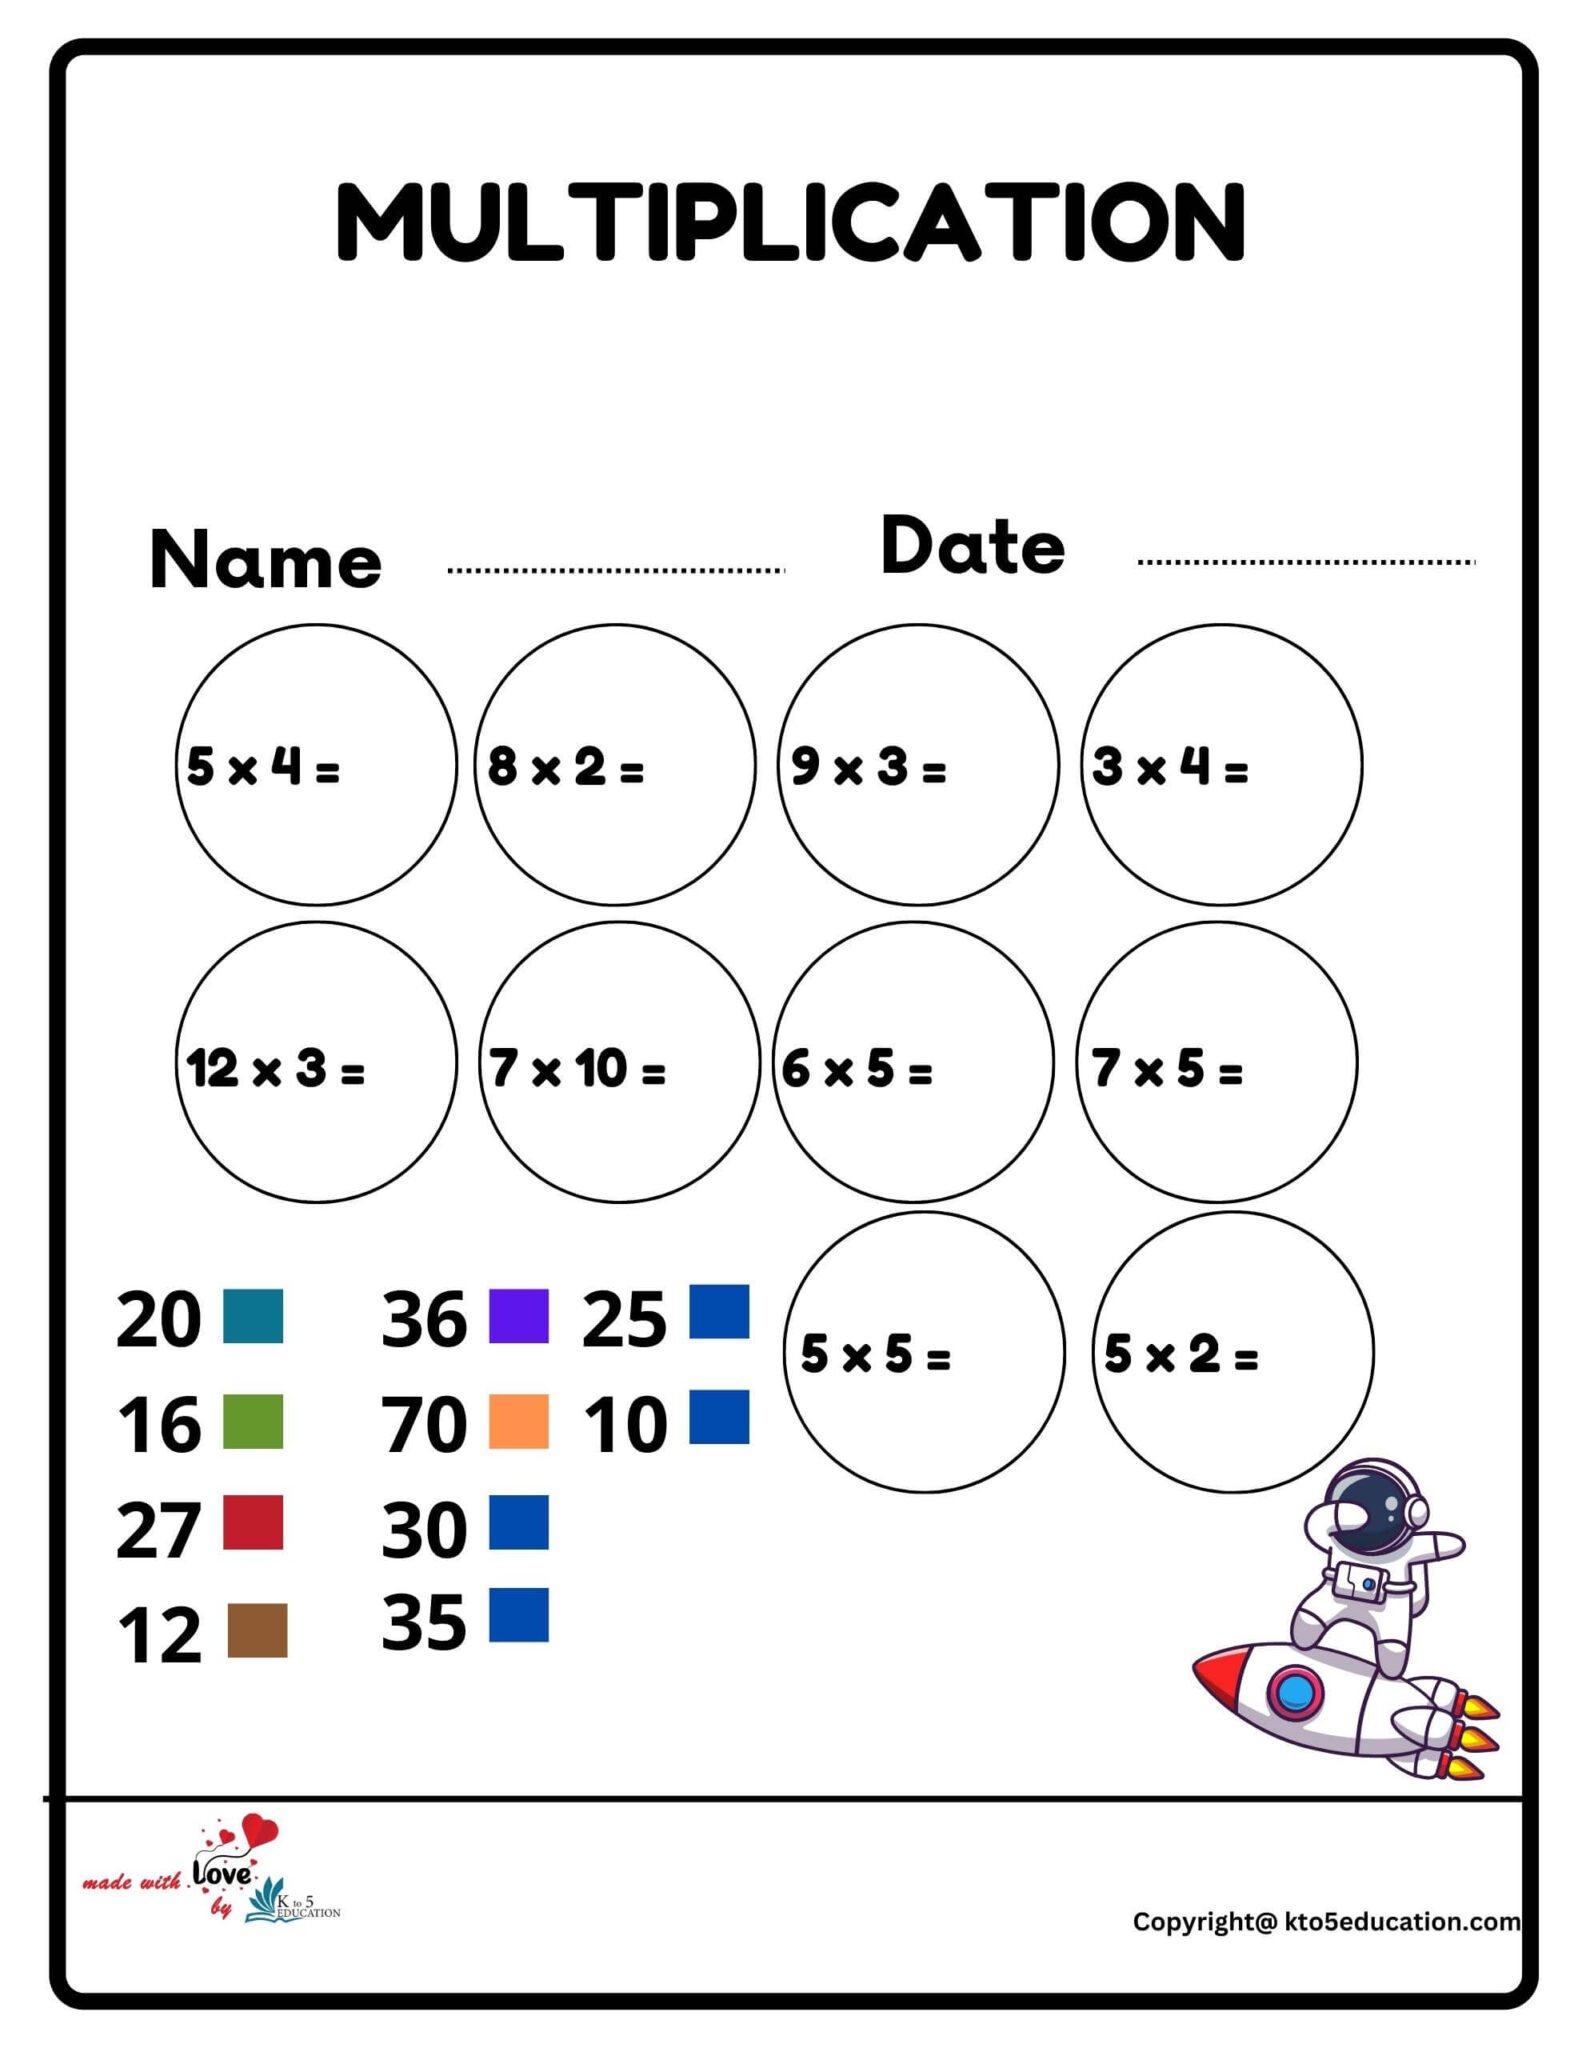 multiplication-worksheets-free-printable-multiplication-worksheets-wonkywonderful-chloe-stoni